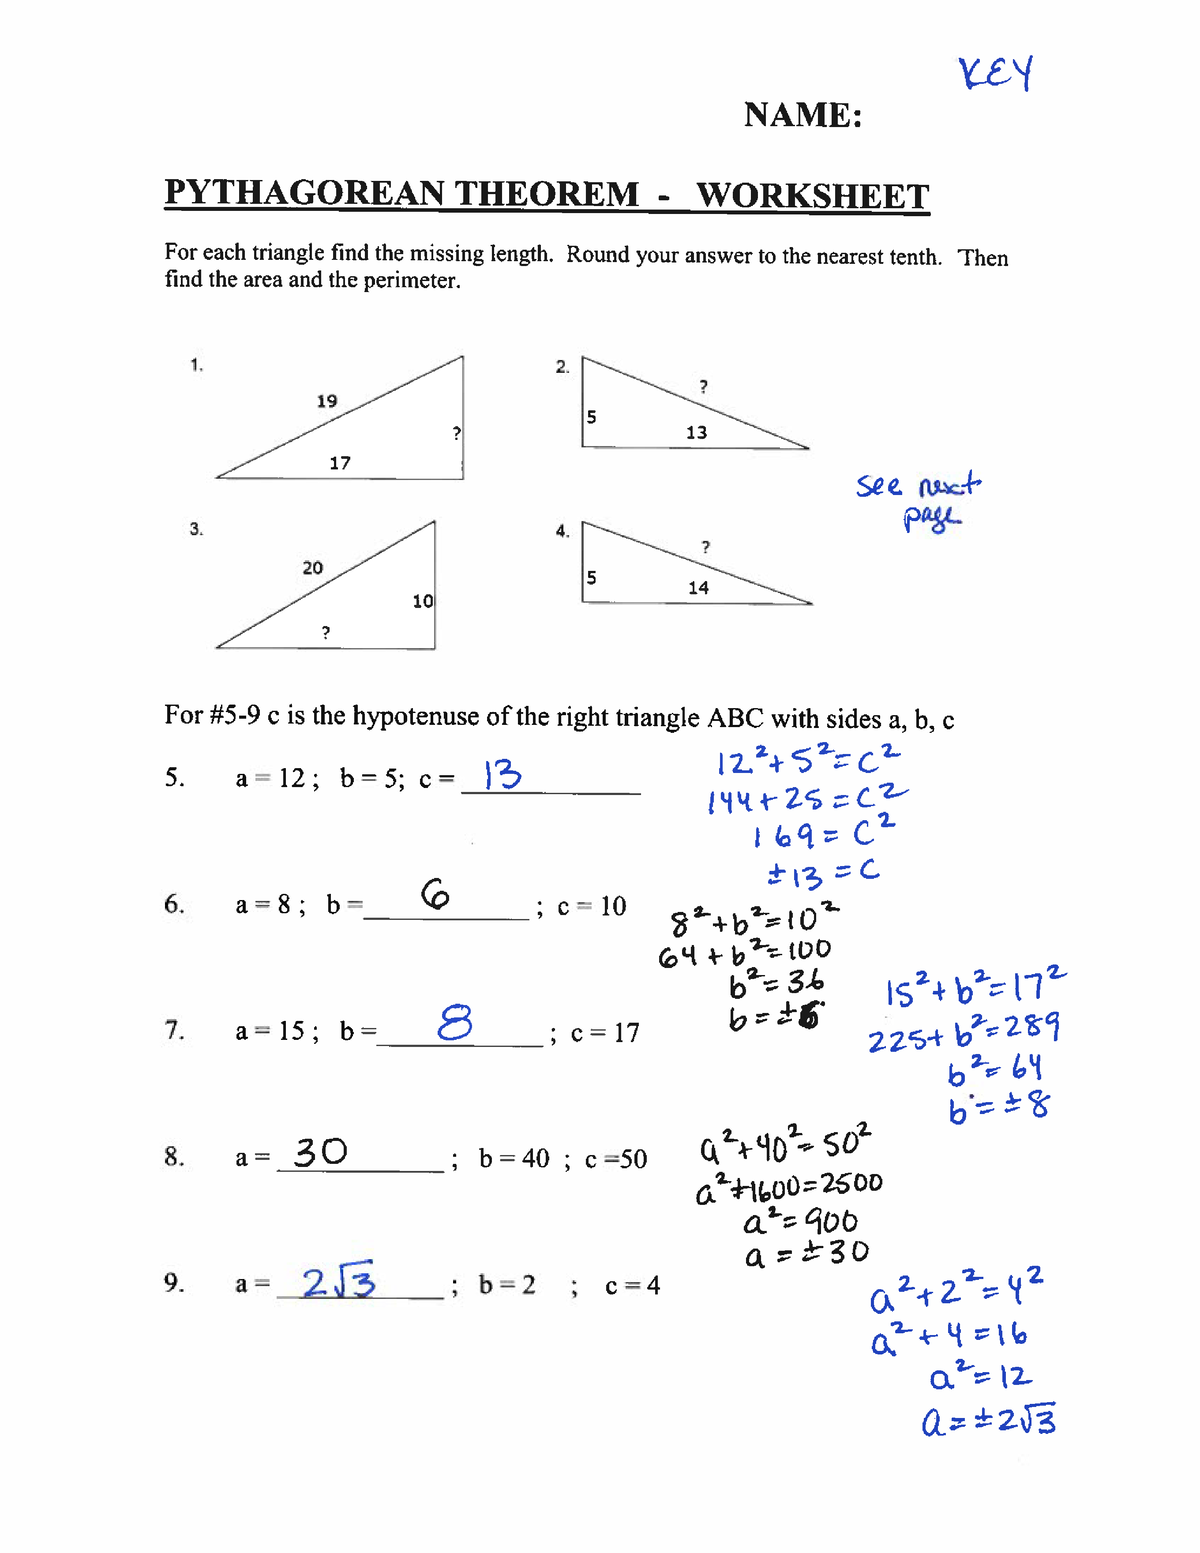 pythagorean theorem assignment answer key